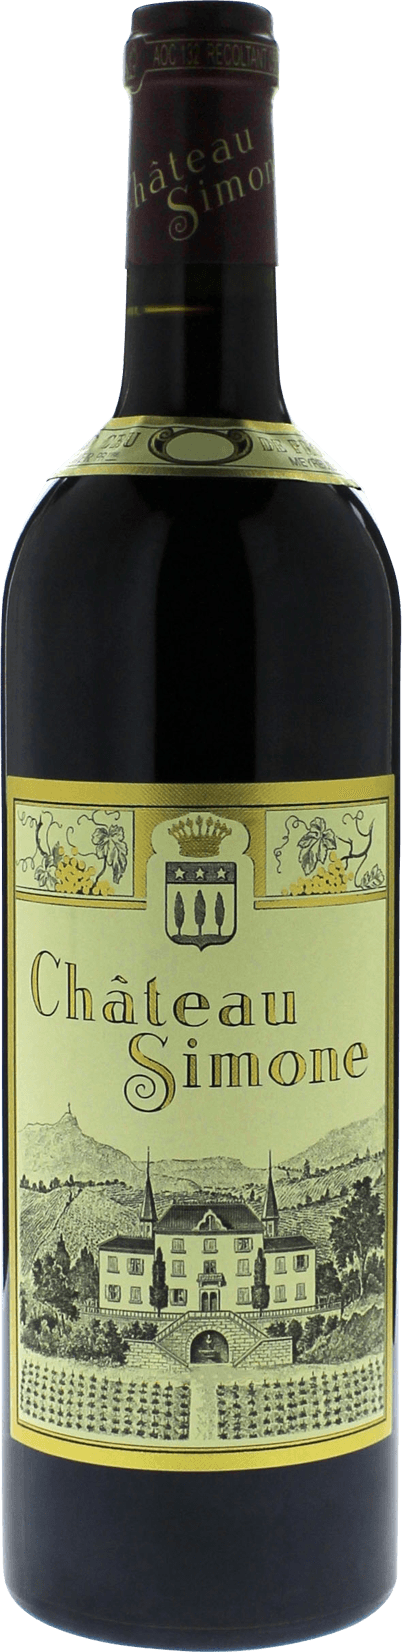 Chteau simone rouge 2015  Palette, Slection provence rouge